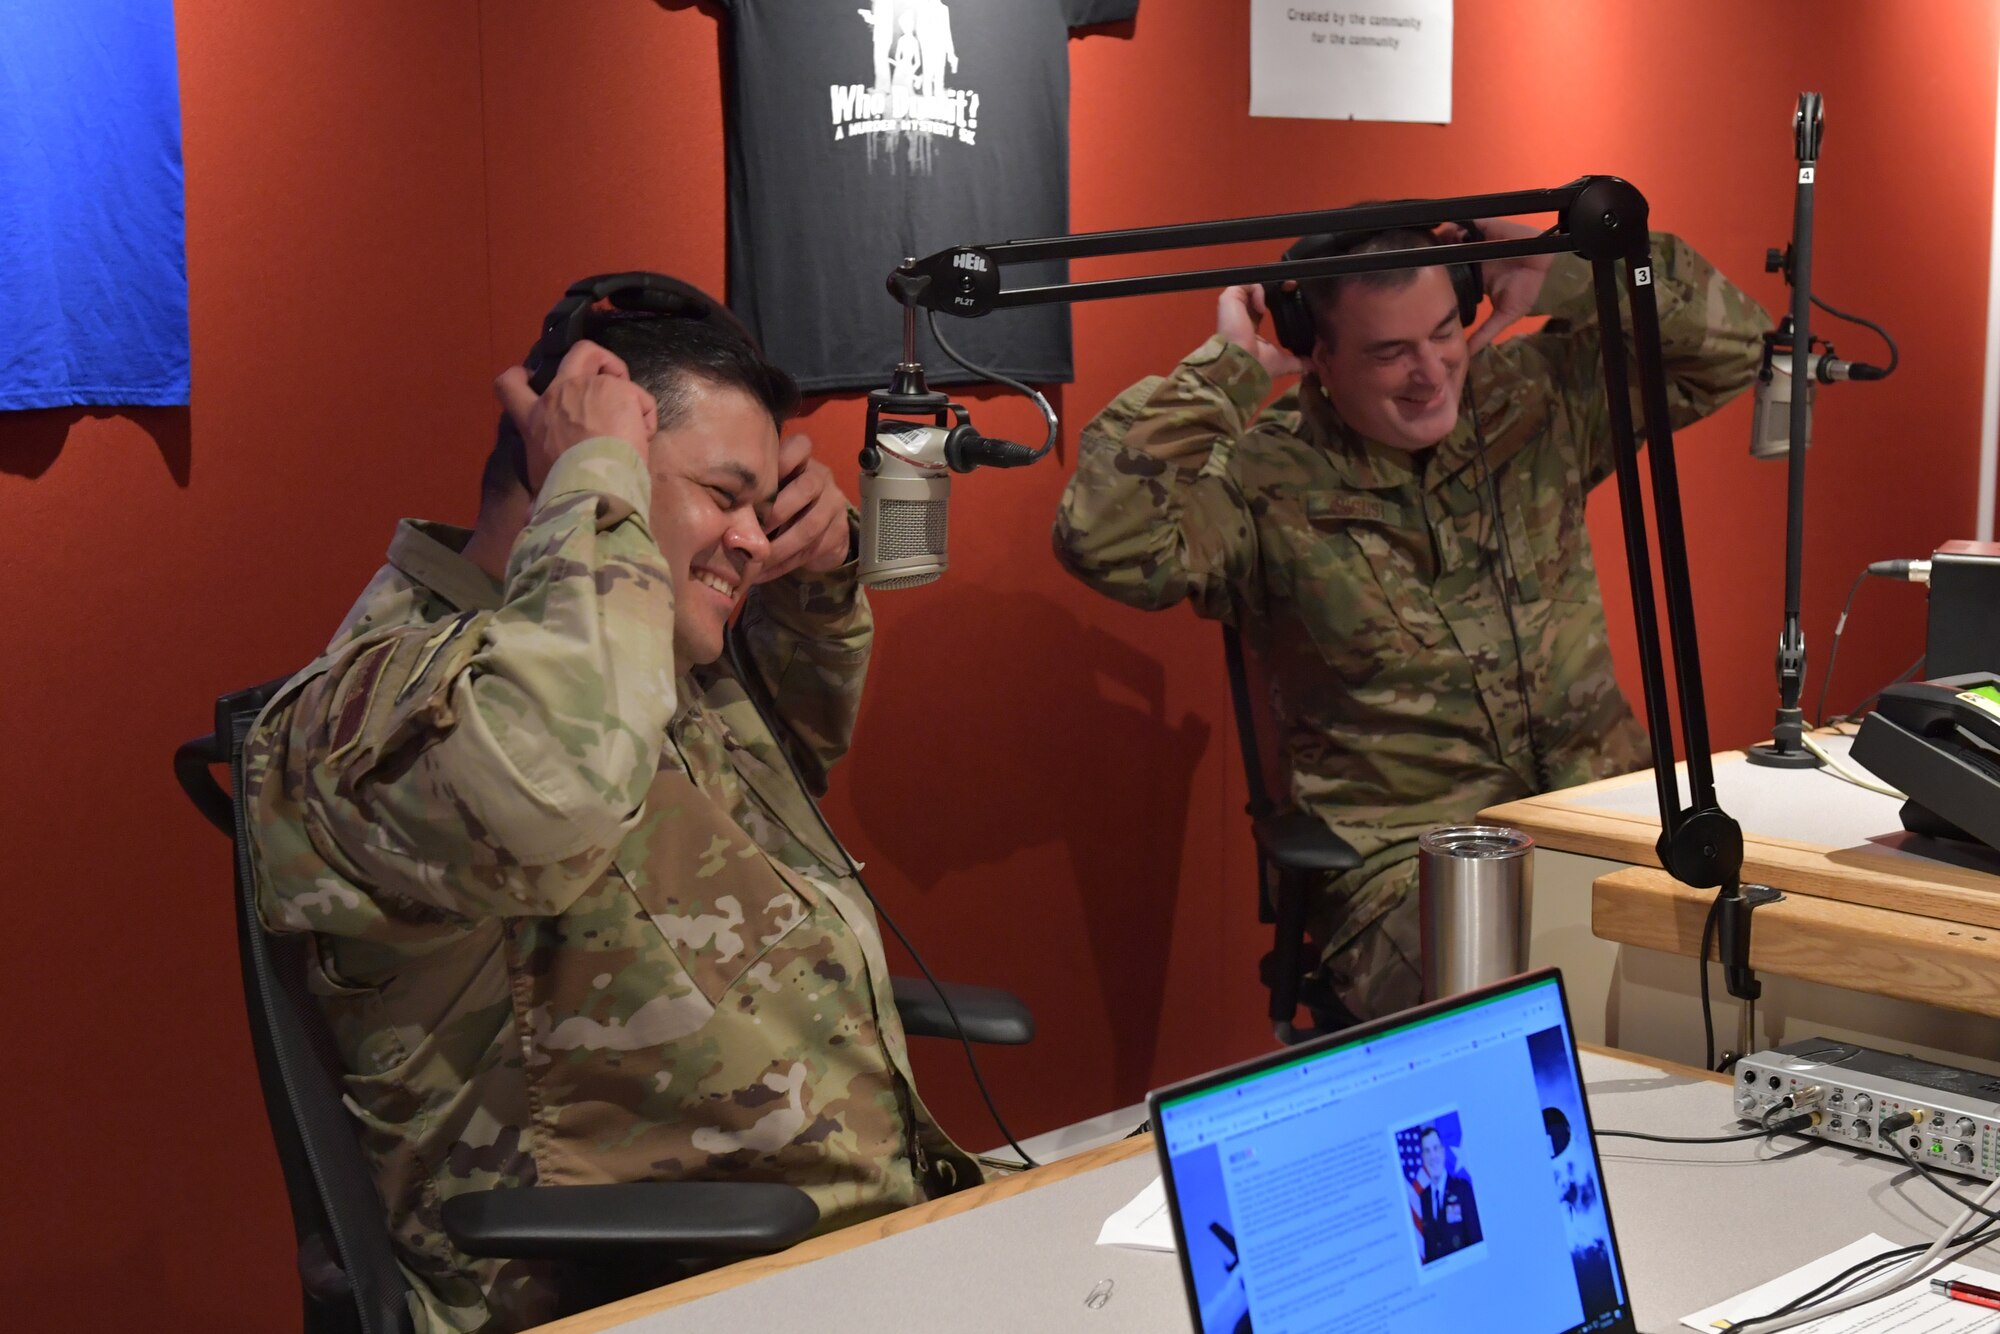 Airmen taking off headphones in a radio station studio.